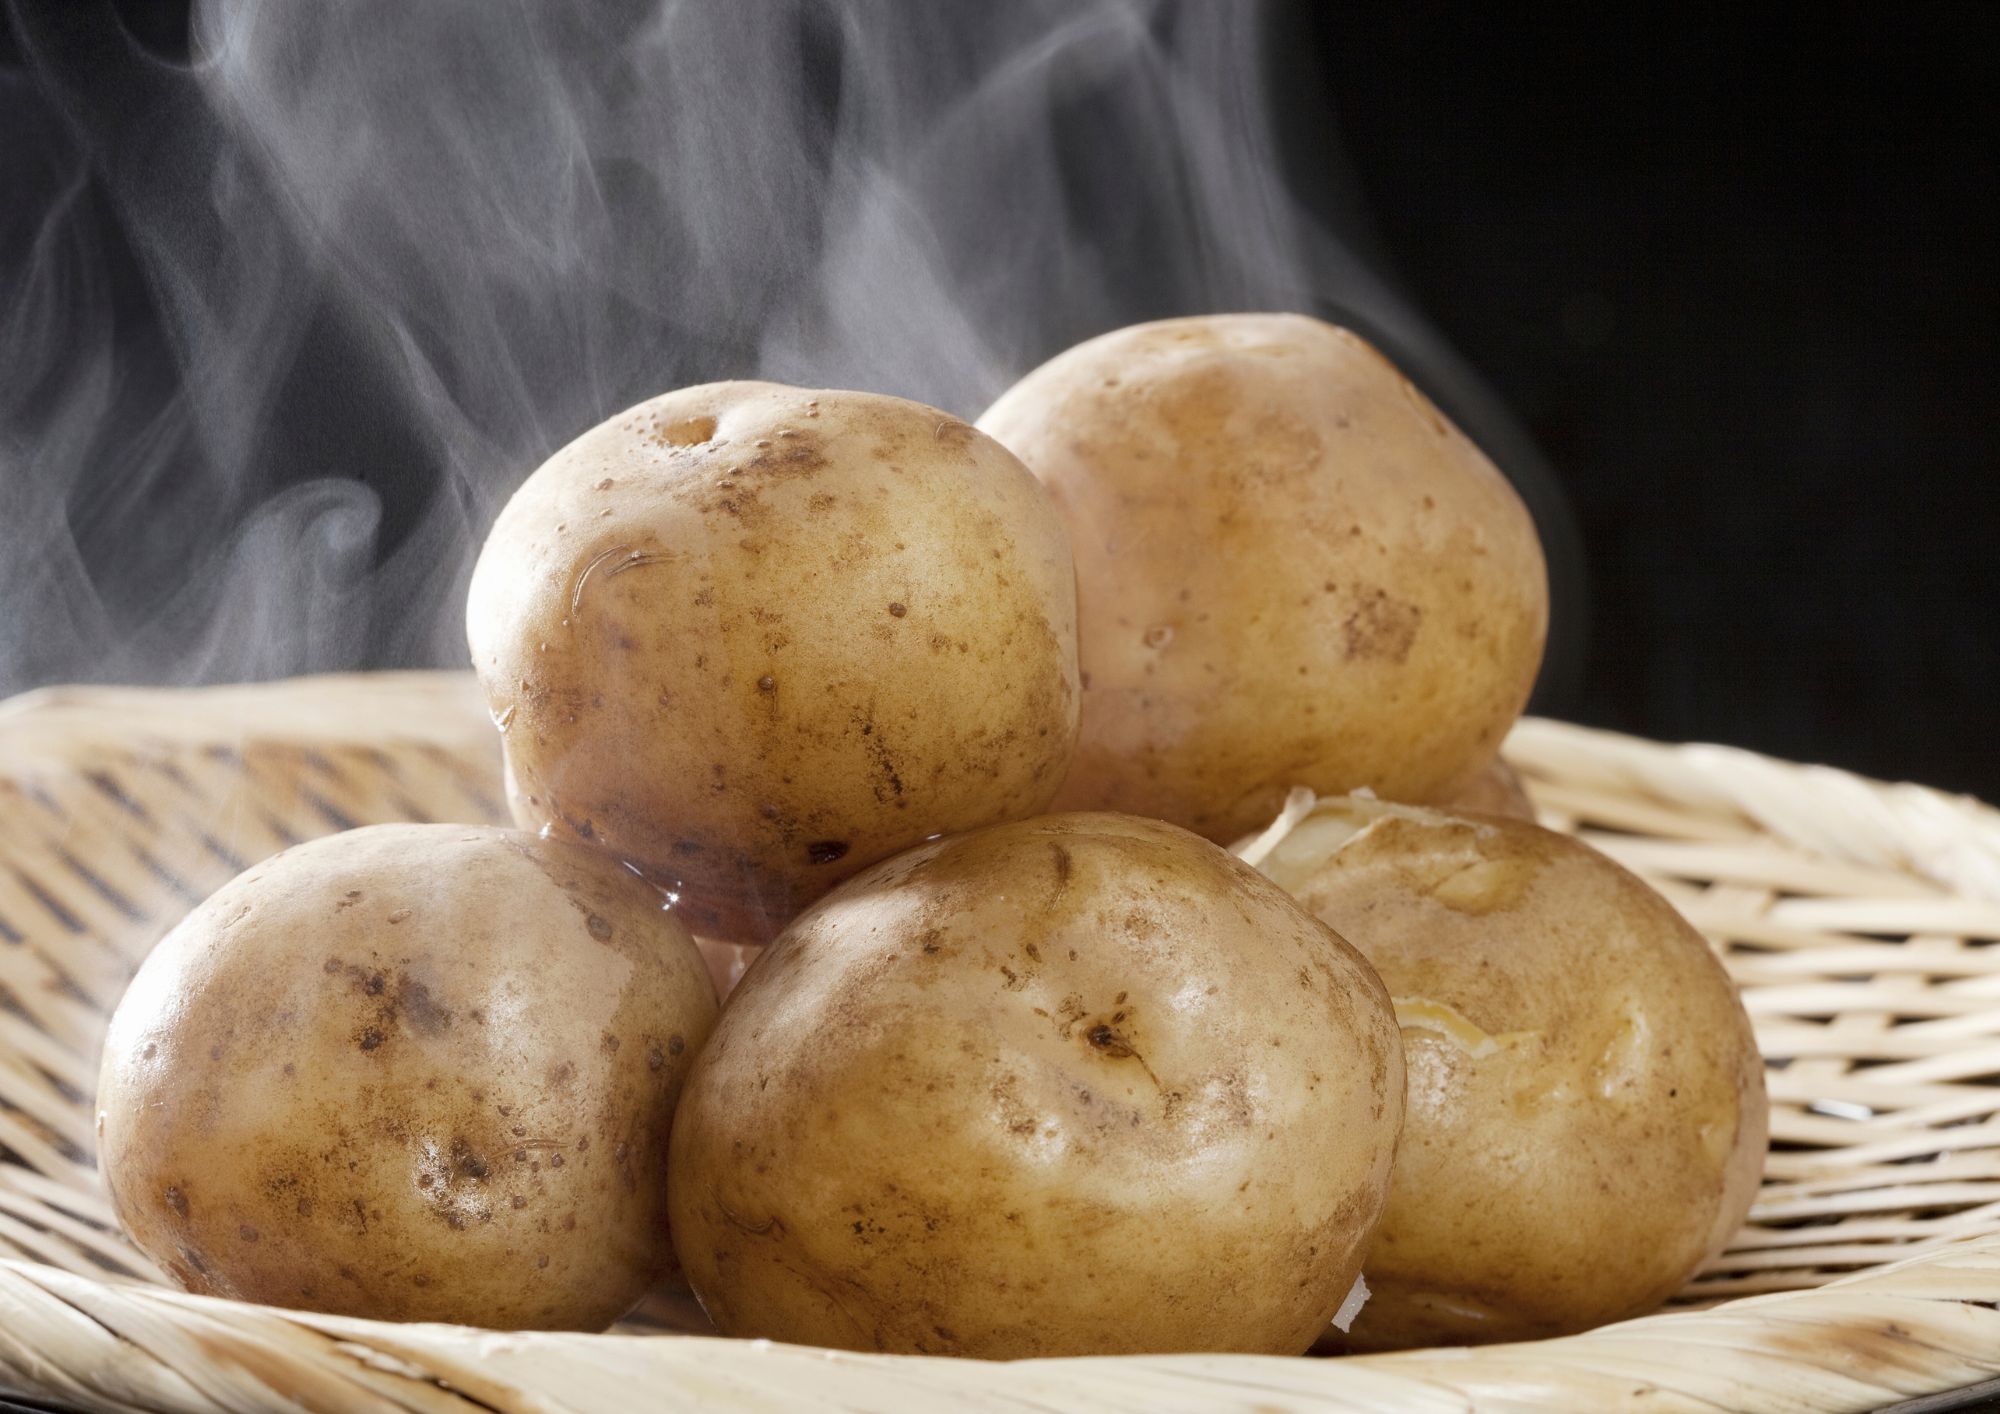 #zerowaste: how to reuse potato cooking water